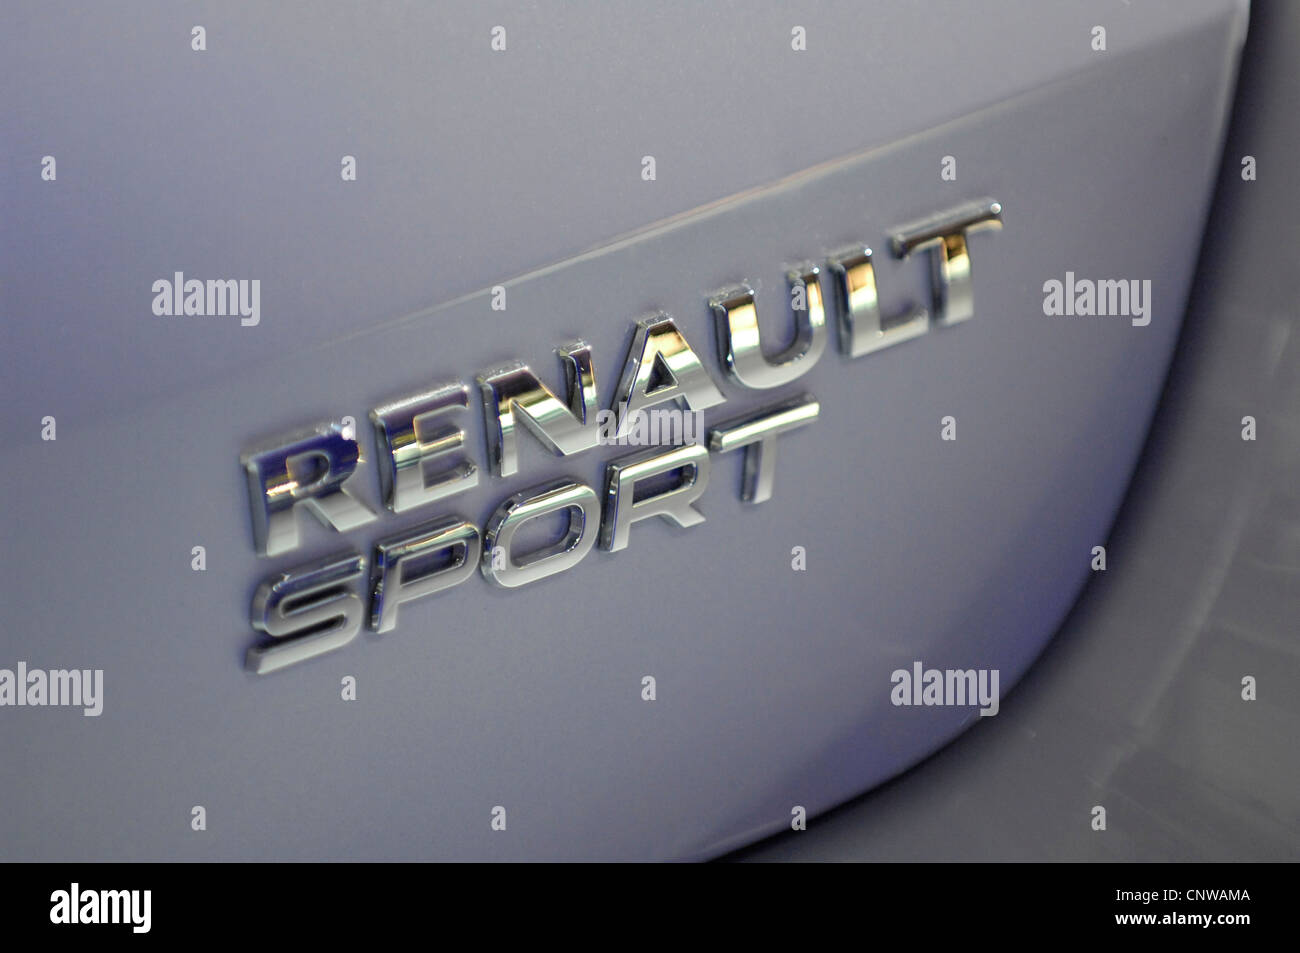 Renault Twingo Sport press launch 2007 Stock Photo